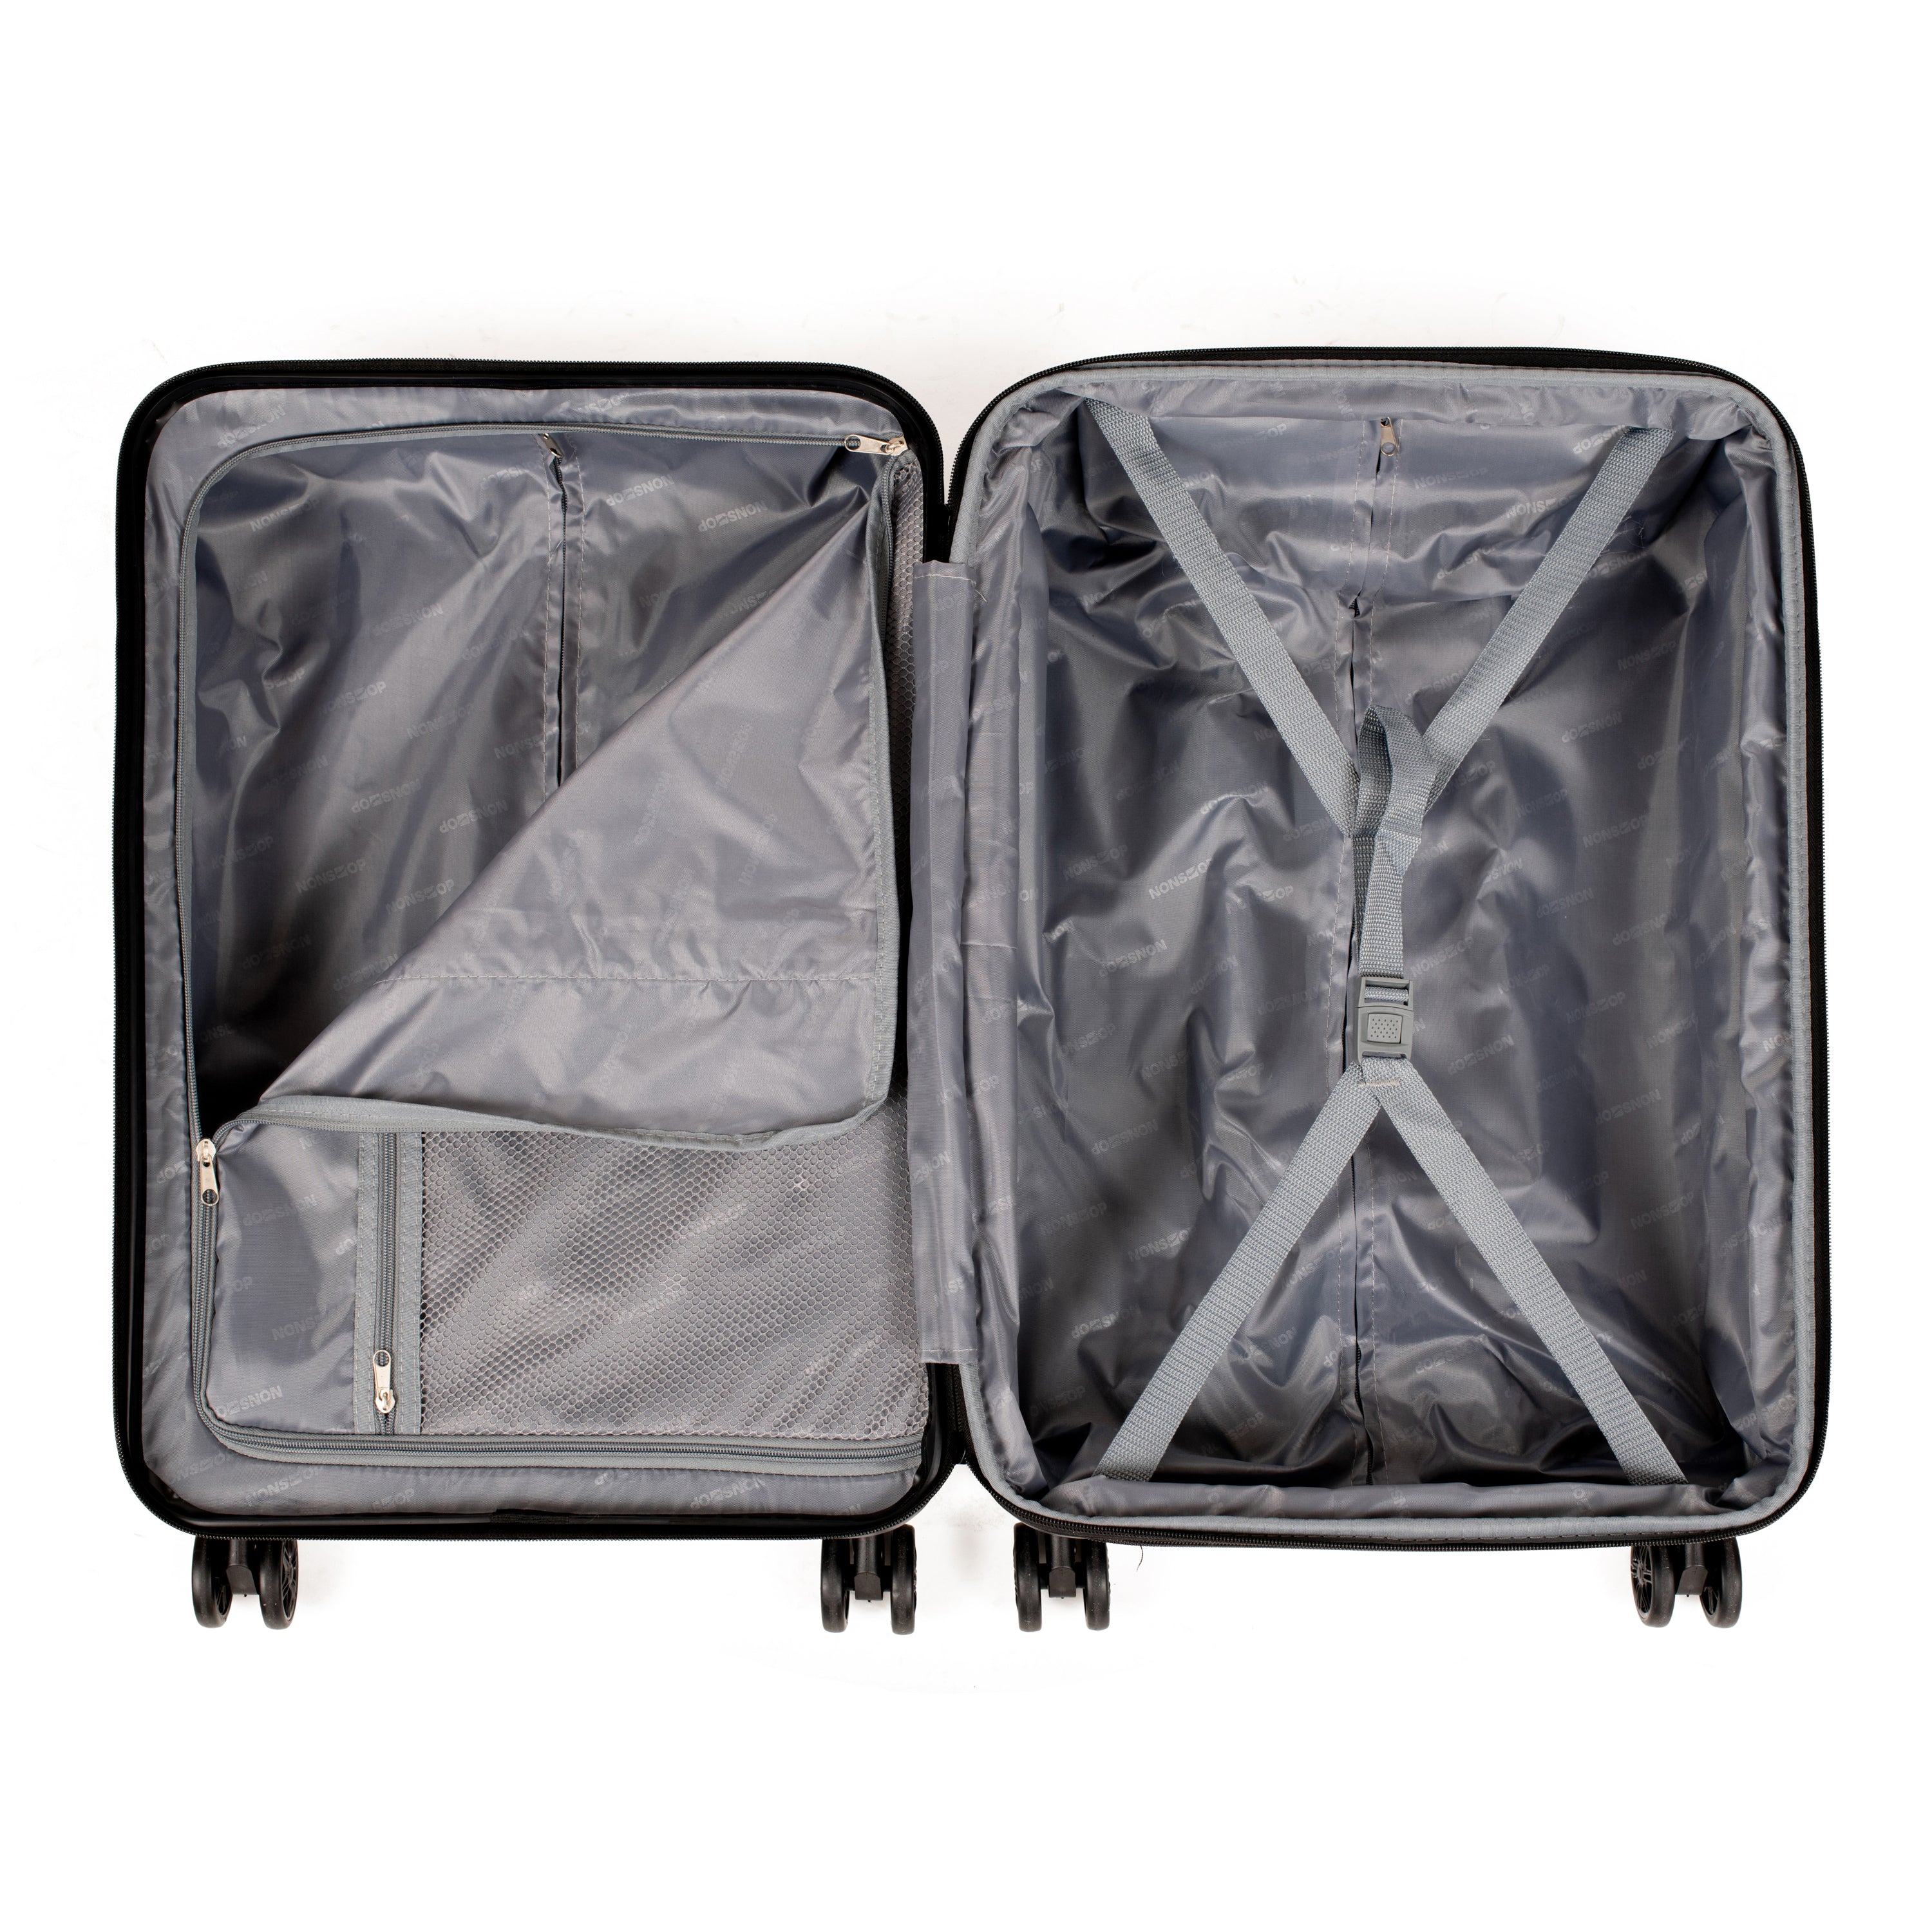 Travel luggage bag – Take OFF Luggage